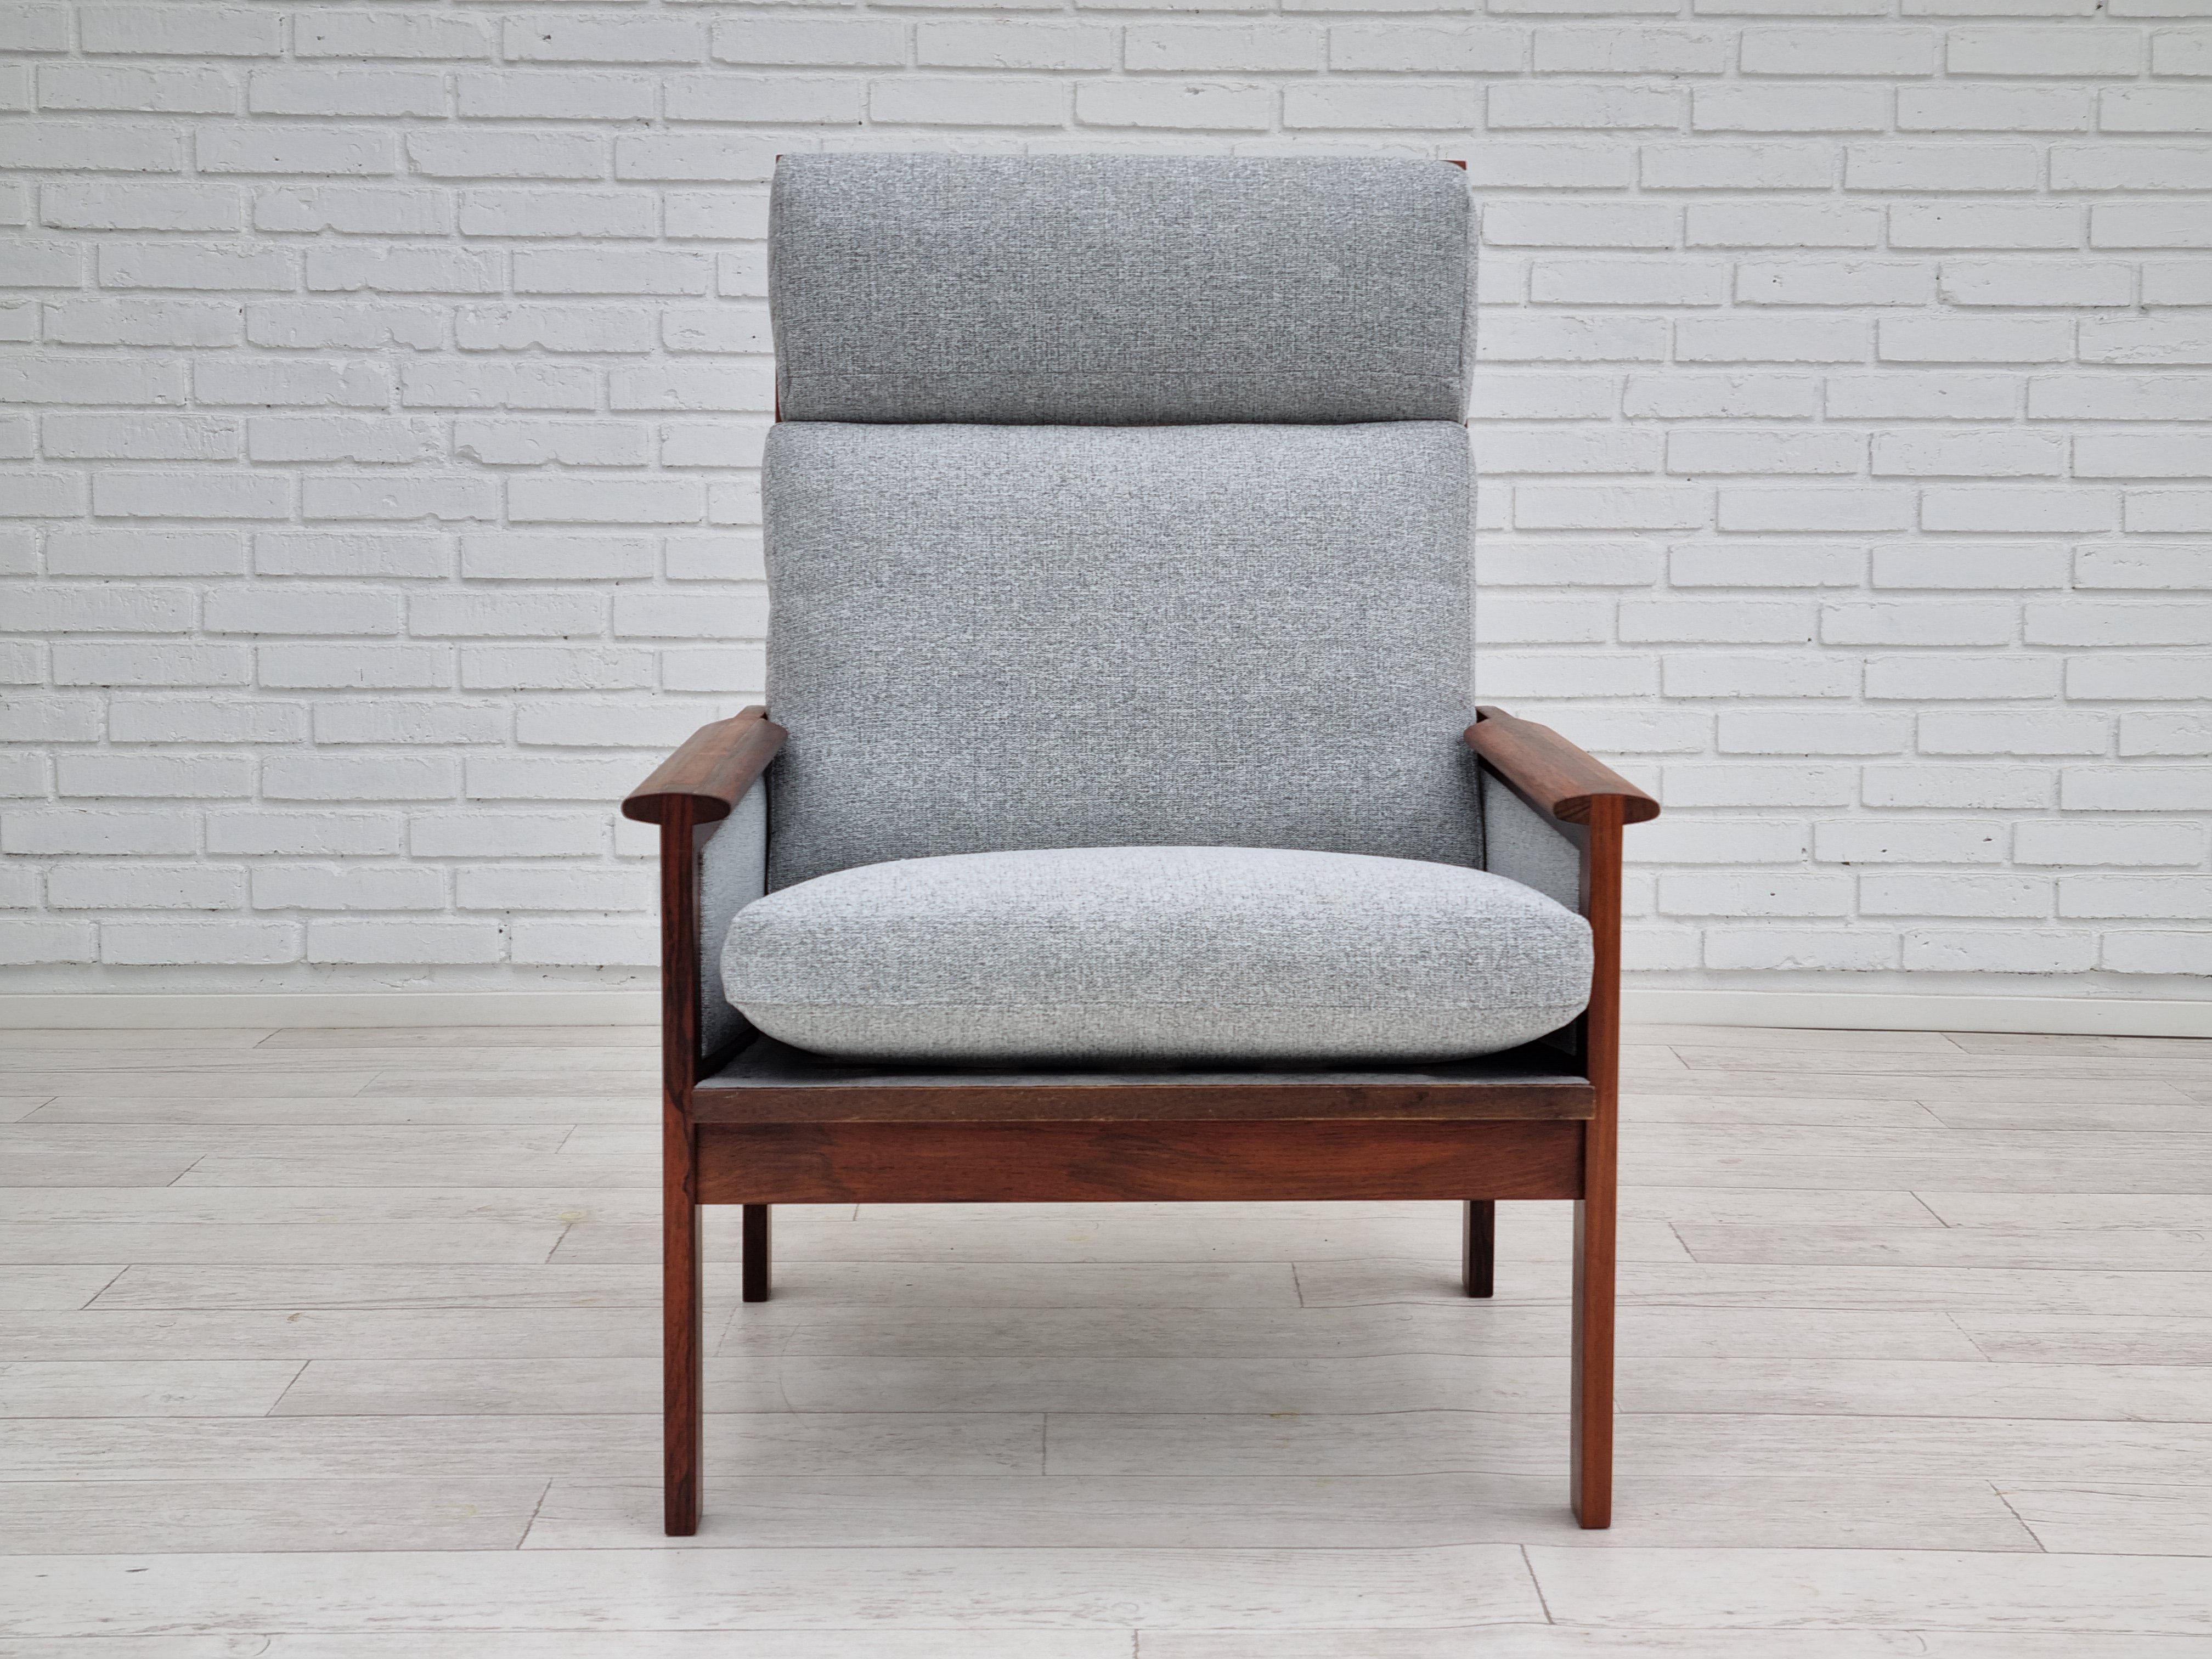 70s, Danish design by Illum Wikkelsø, model Capella, renovated armchair, teak In Excellent Condition For Sale In Tarm, 82